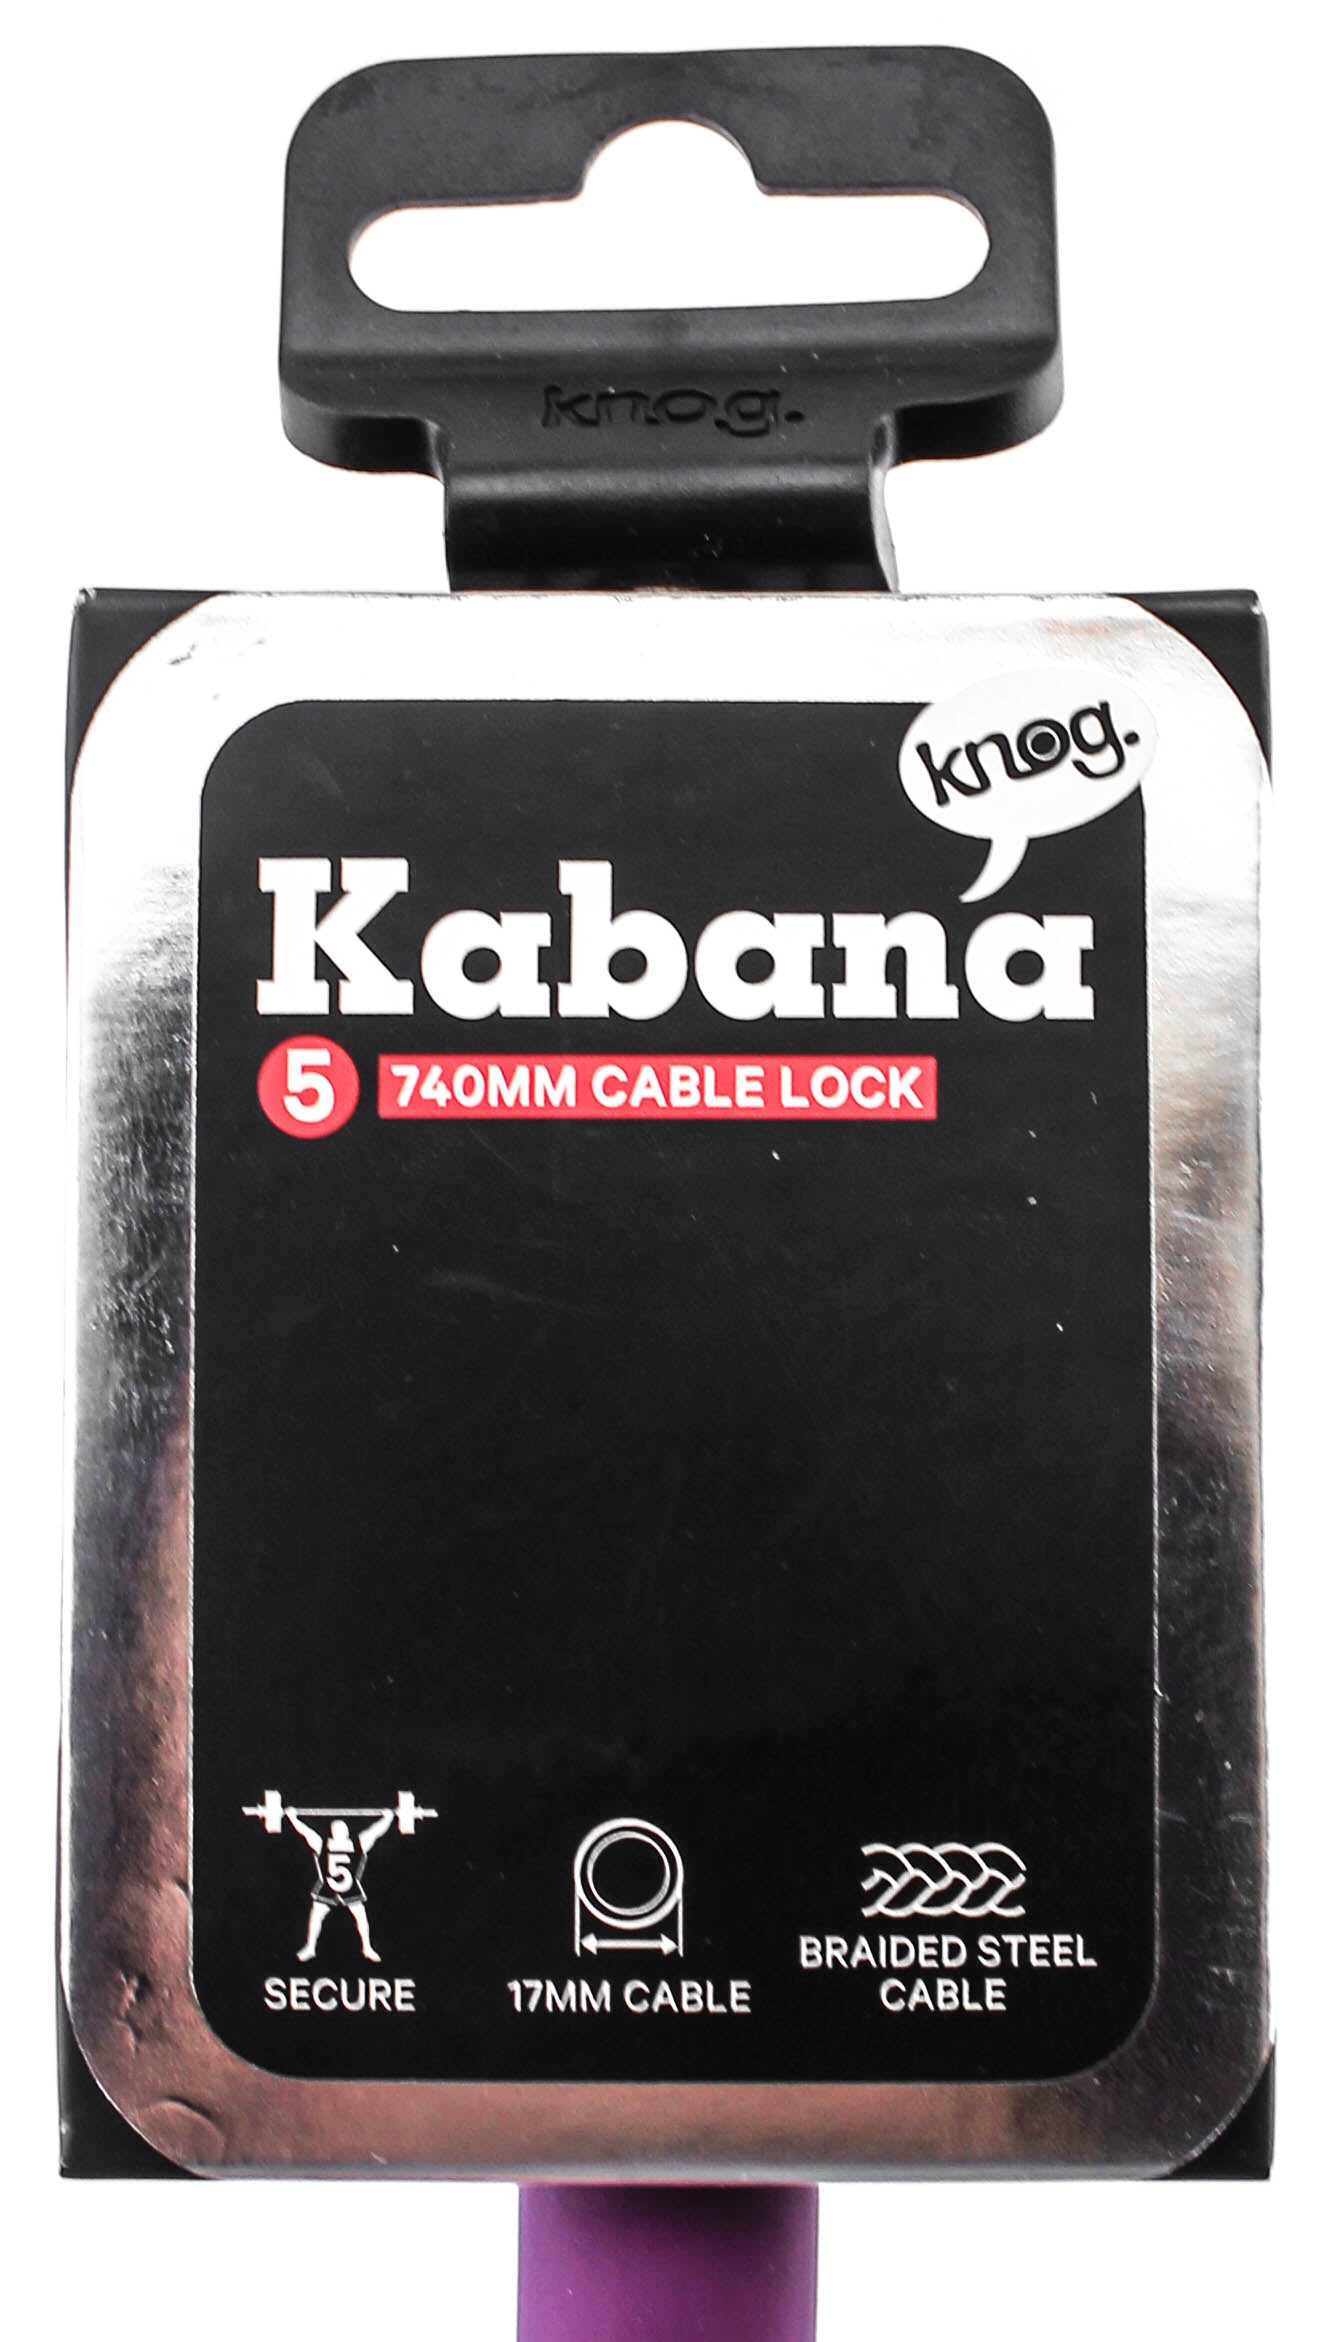 Knog Kabana Cable Bike Lock 740mm Grape Purple Silicone Steel Cable New